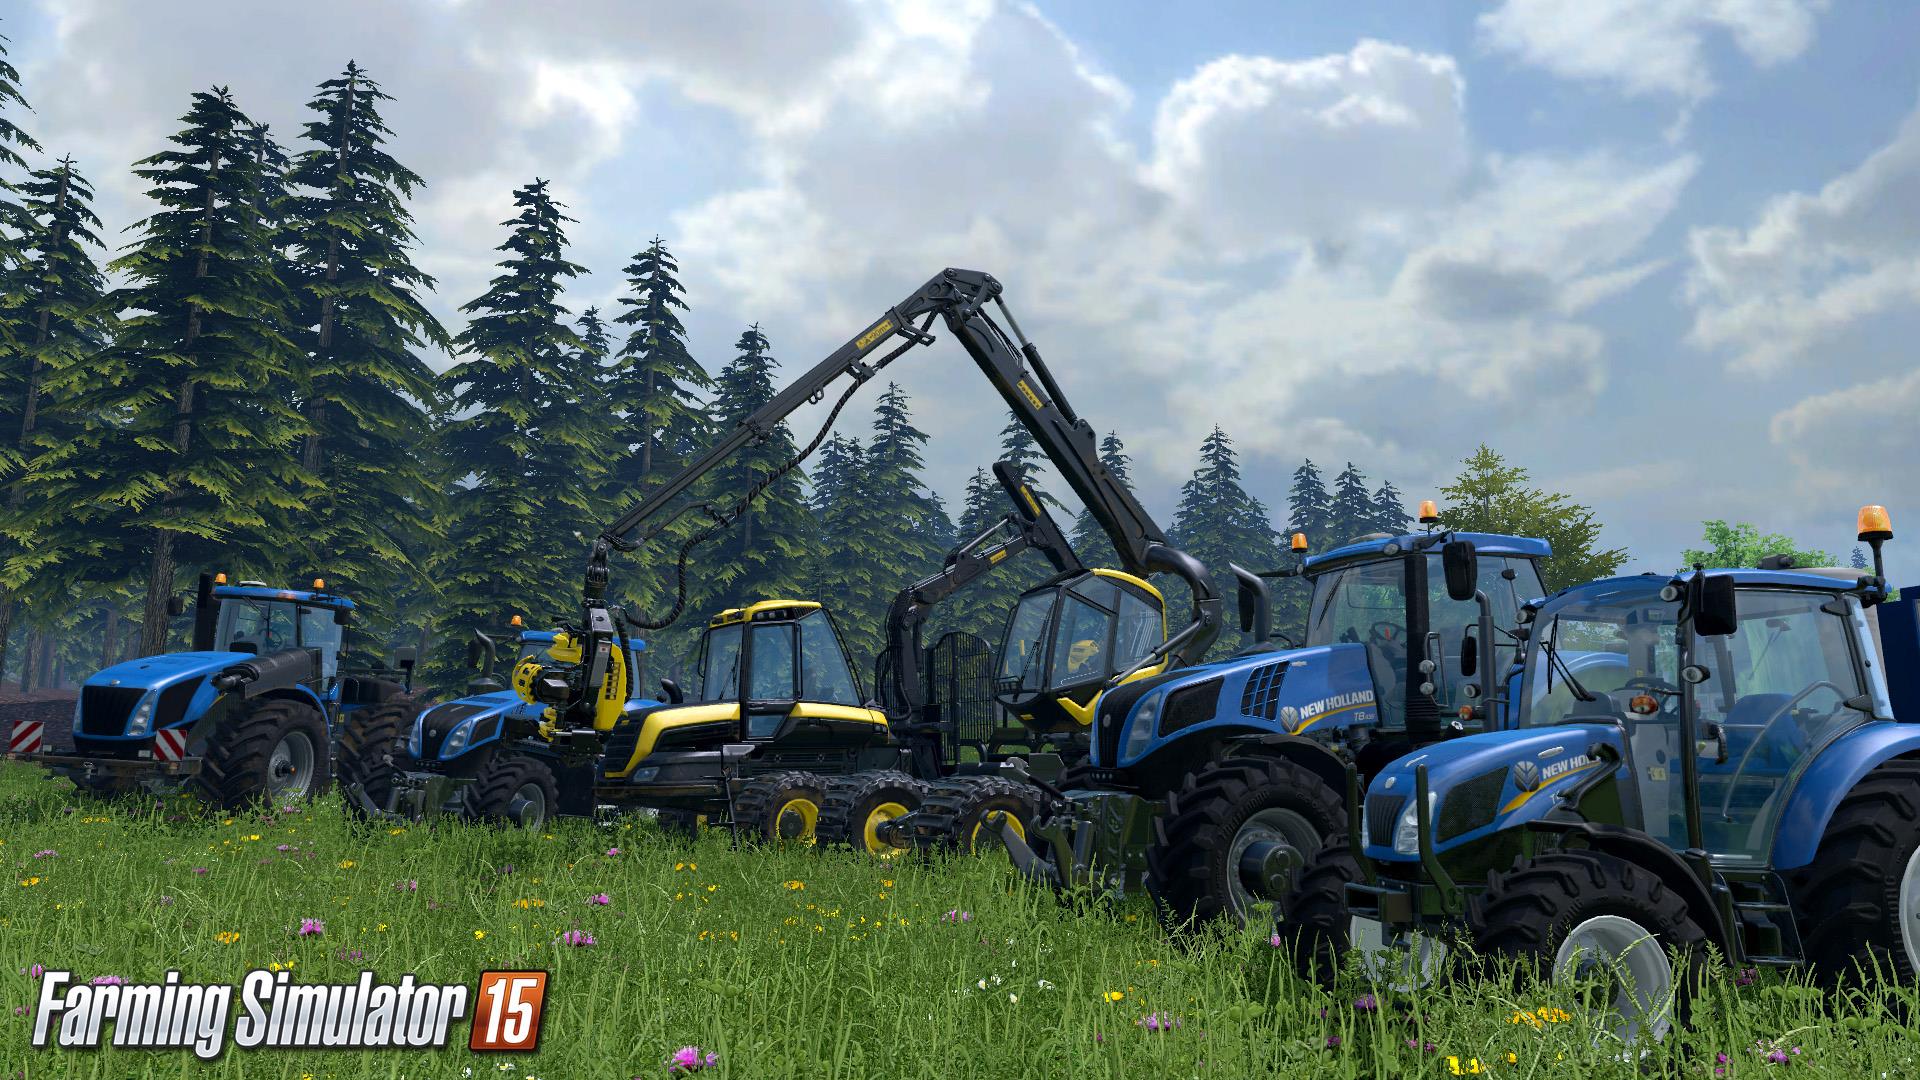 Farming Simulator 2015 .jpg, 386kB